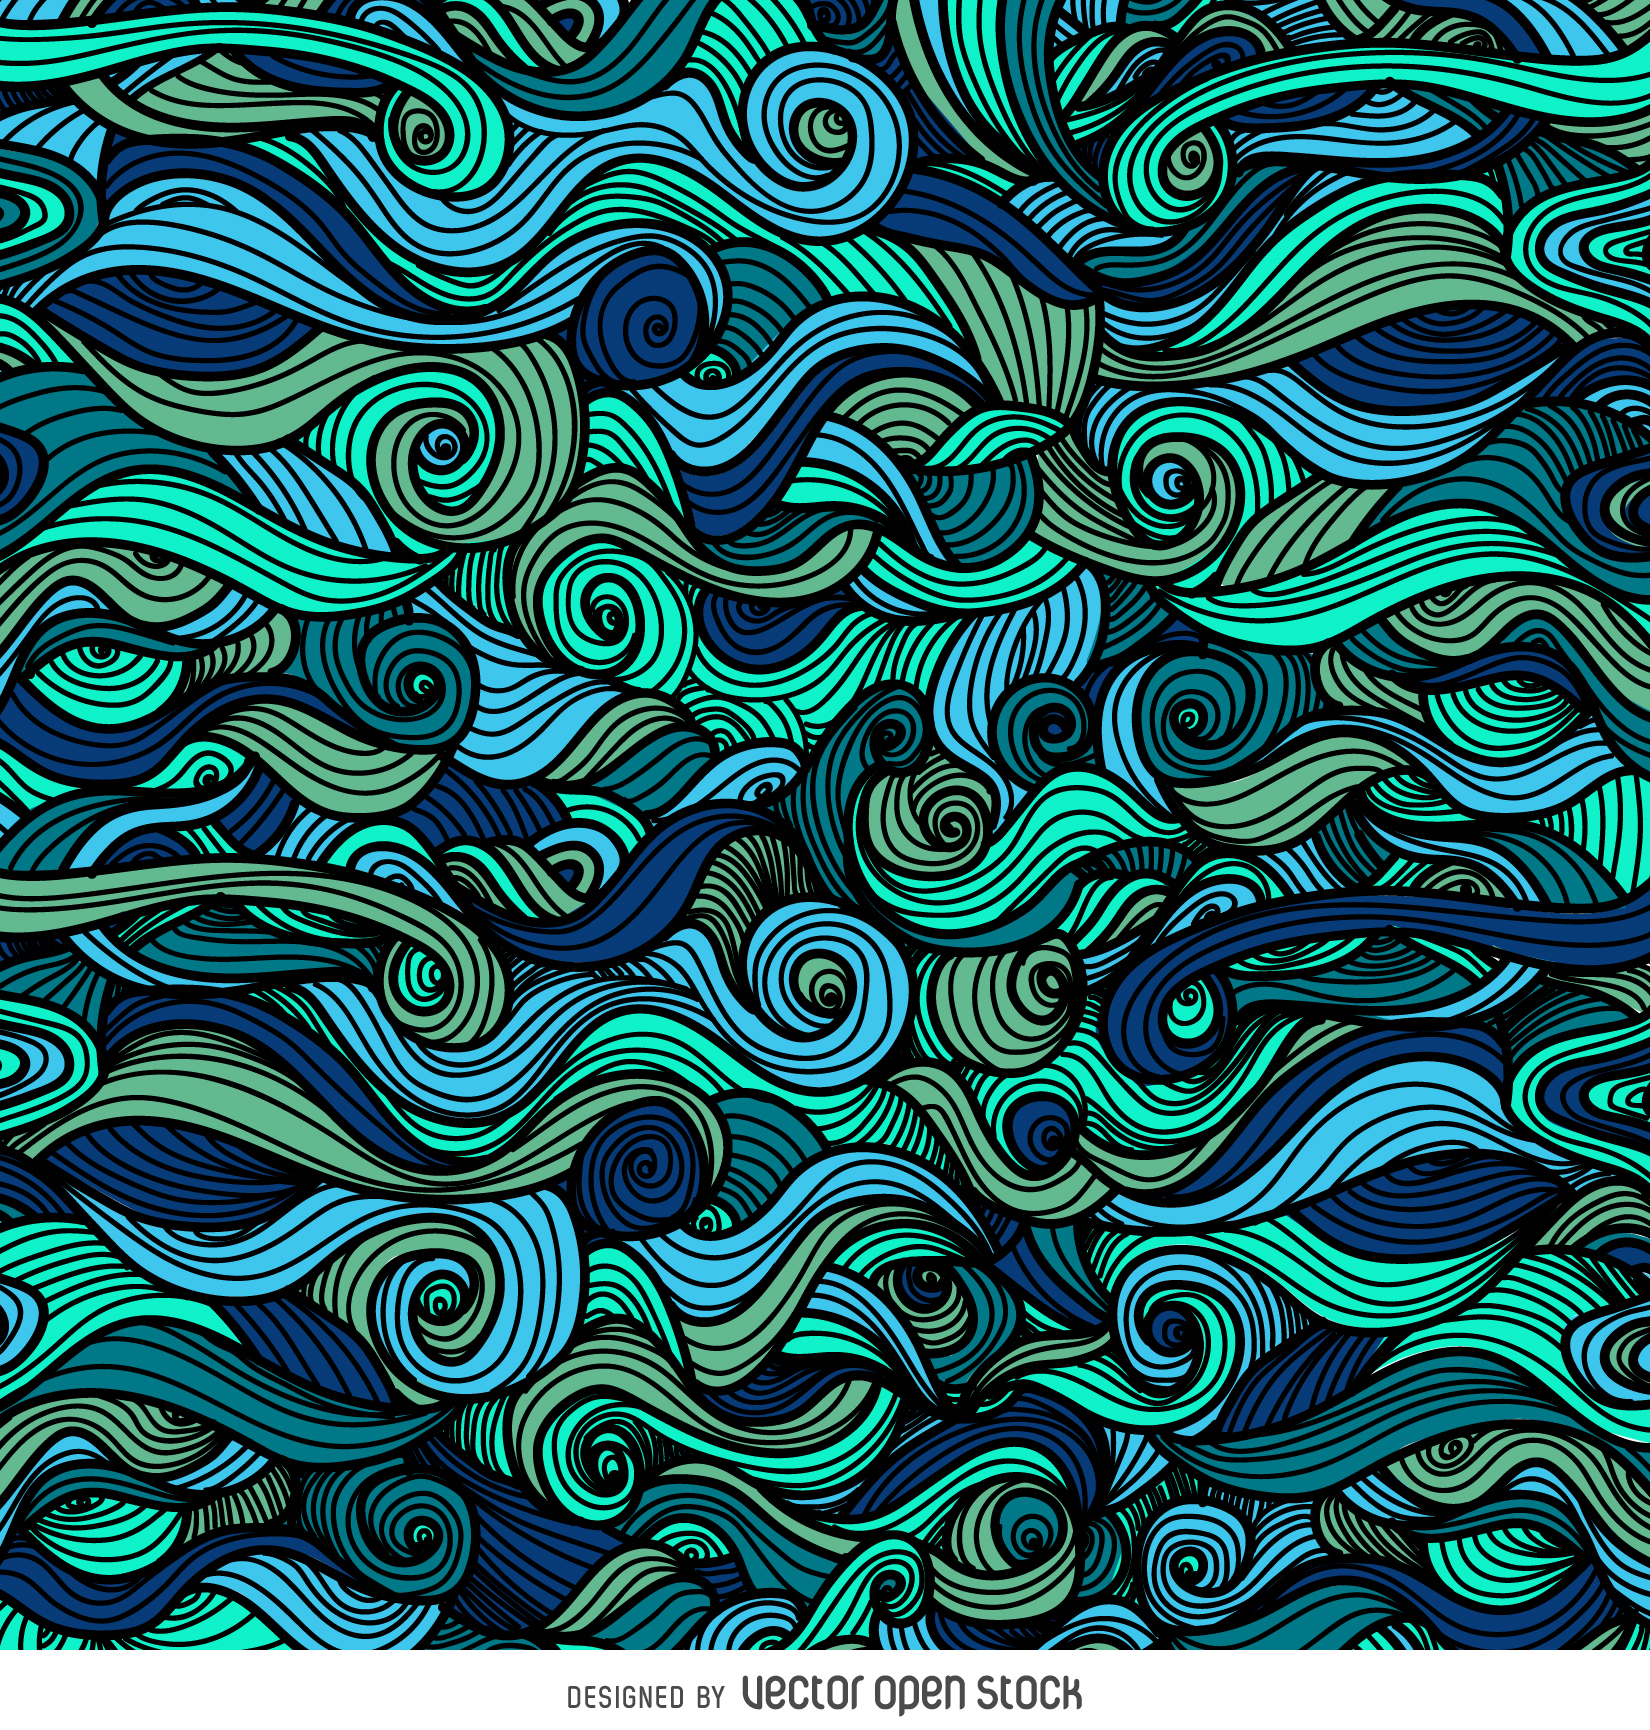 Blue Curly Swirls Background Vector